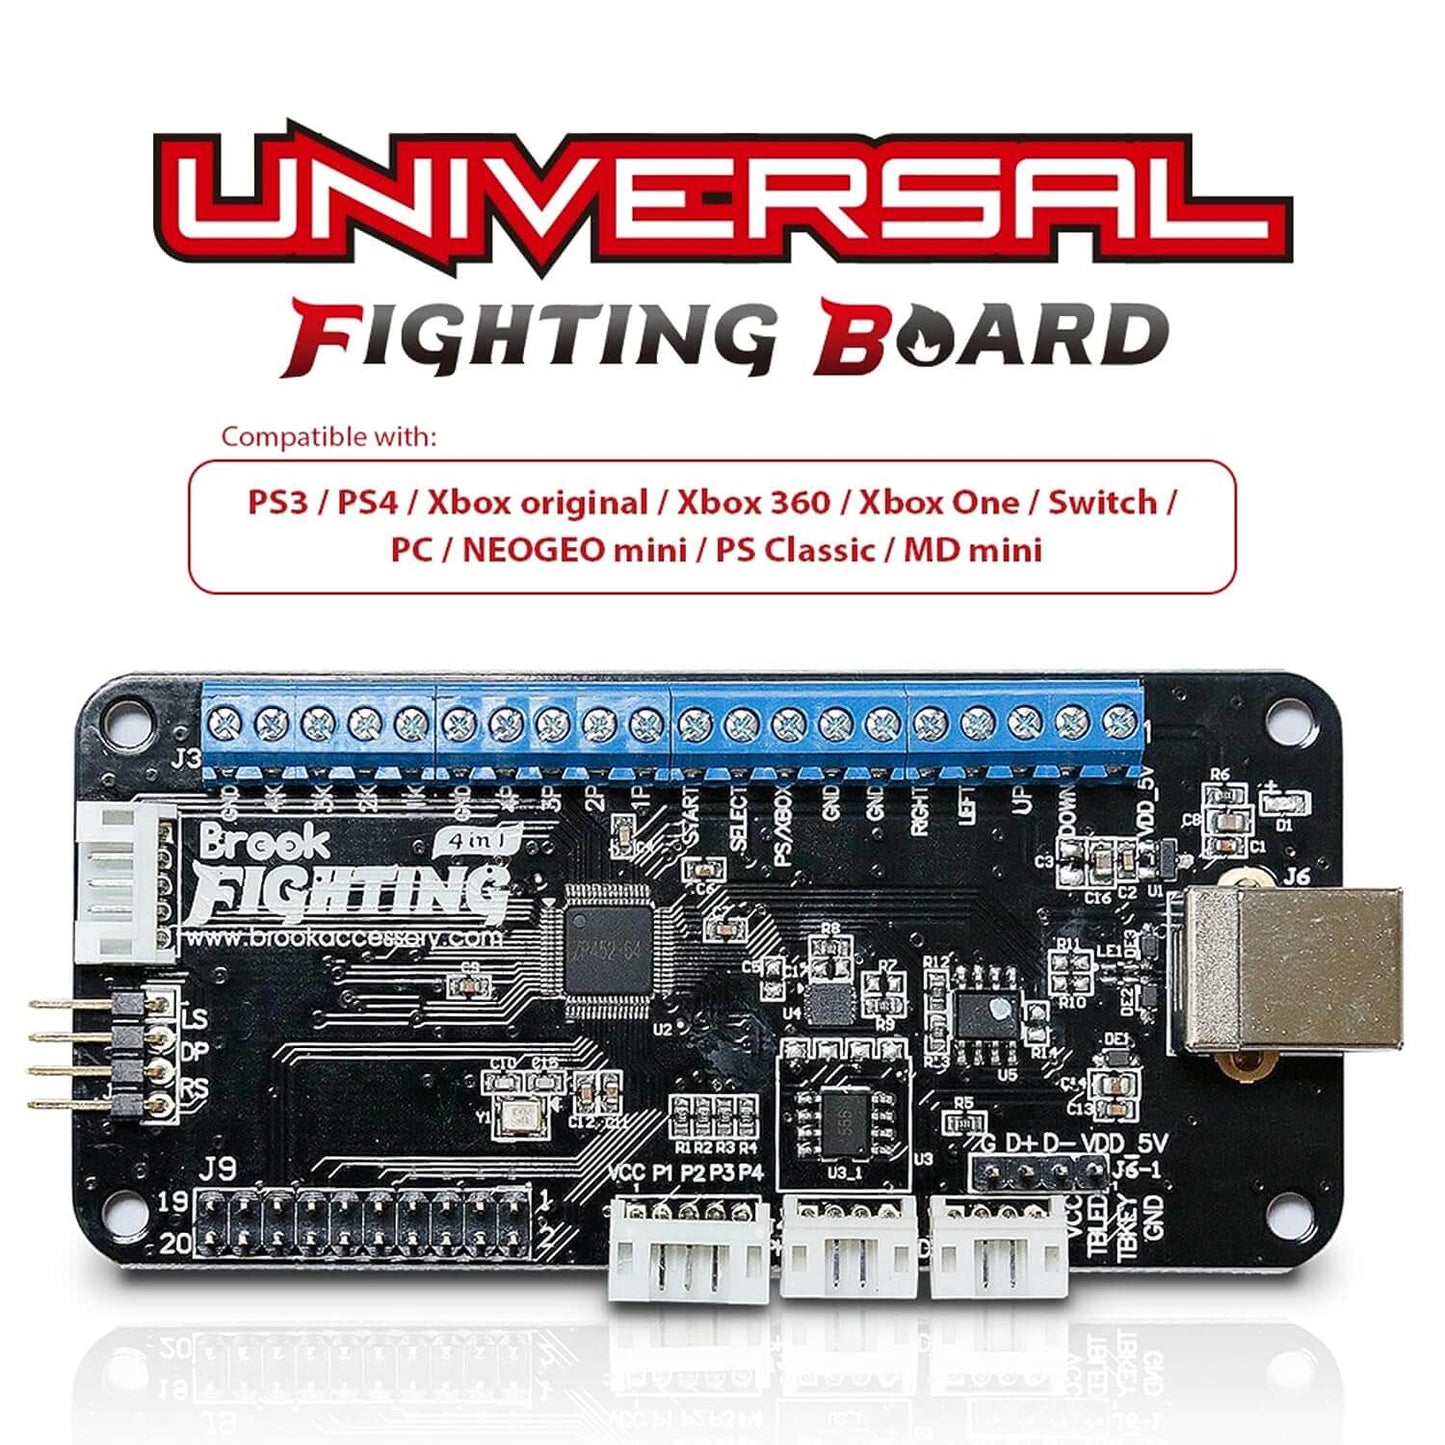 Universal Fighting Board Pre-installed Header Version